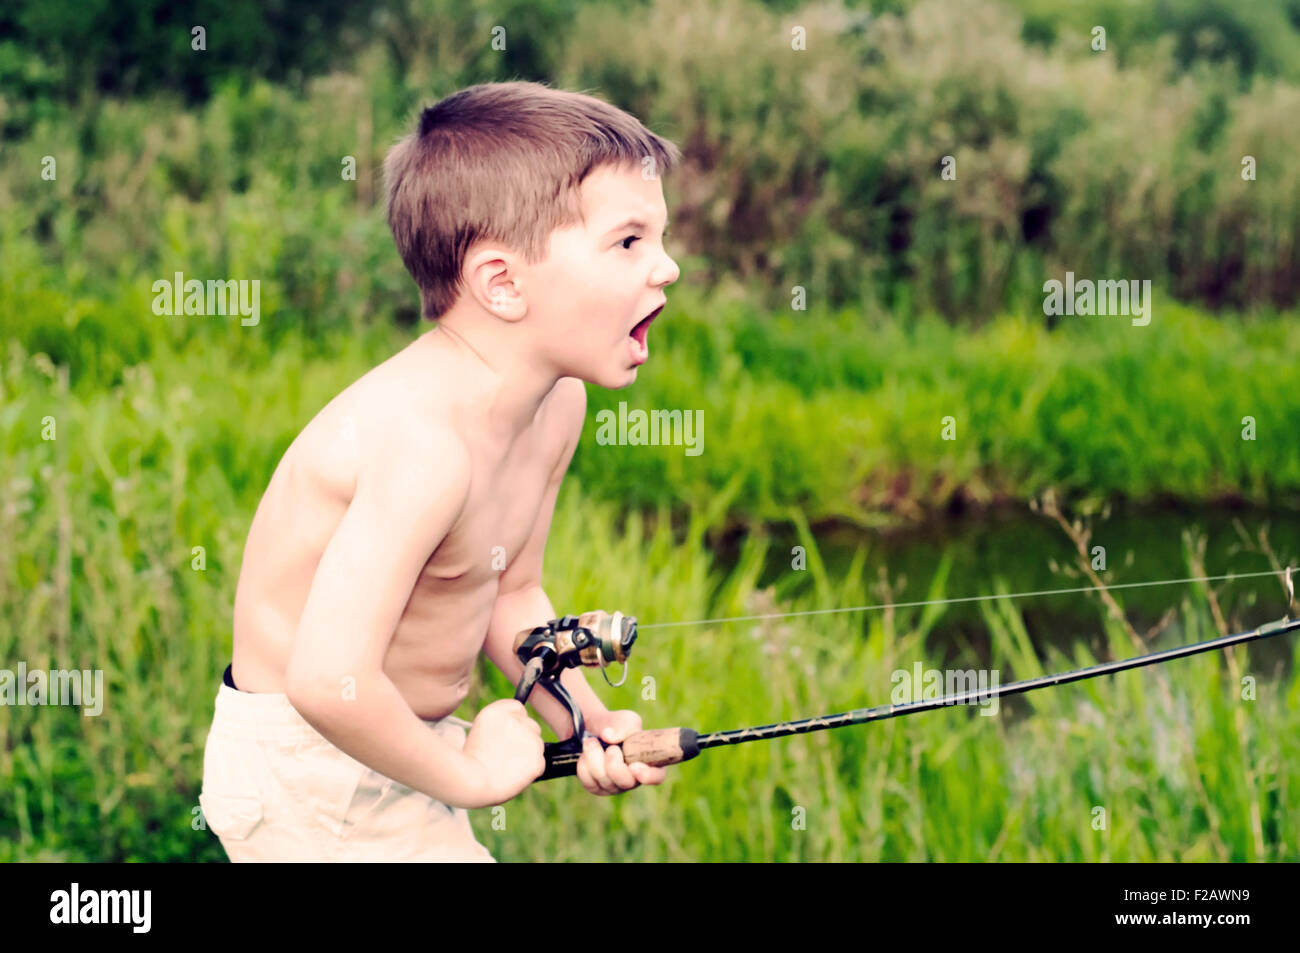 Passionate Angler boy fishing Stock Photo